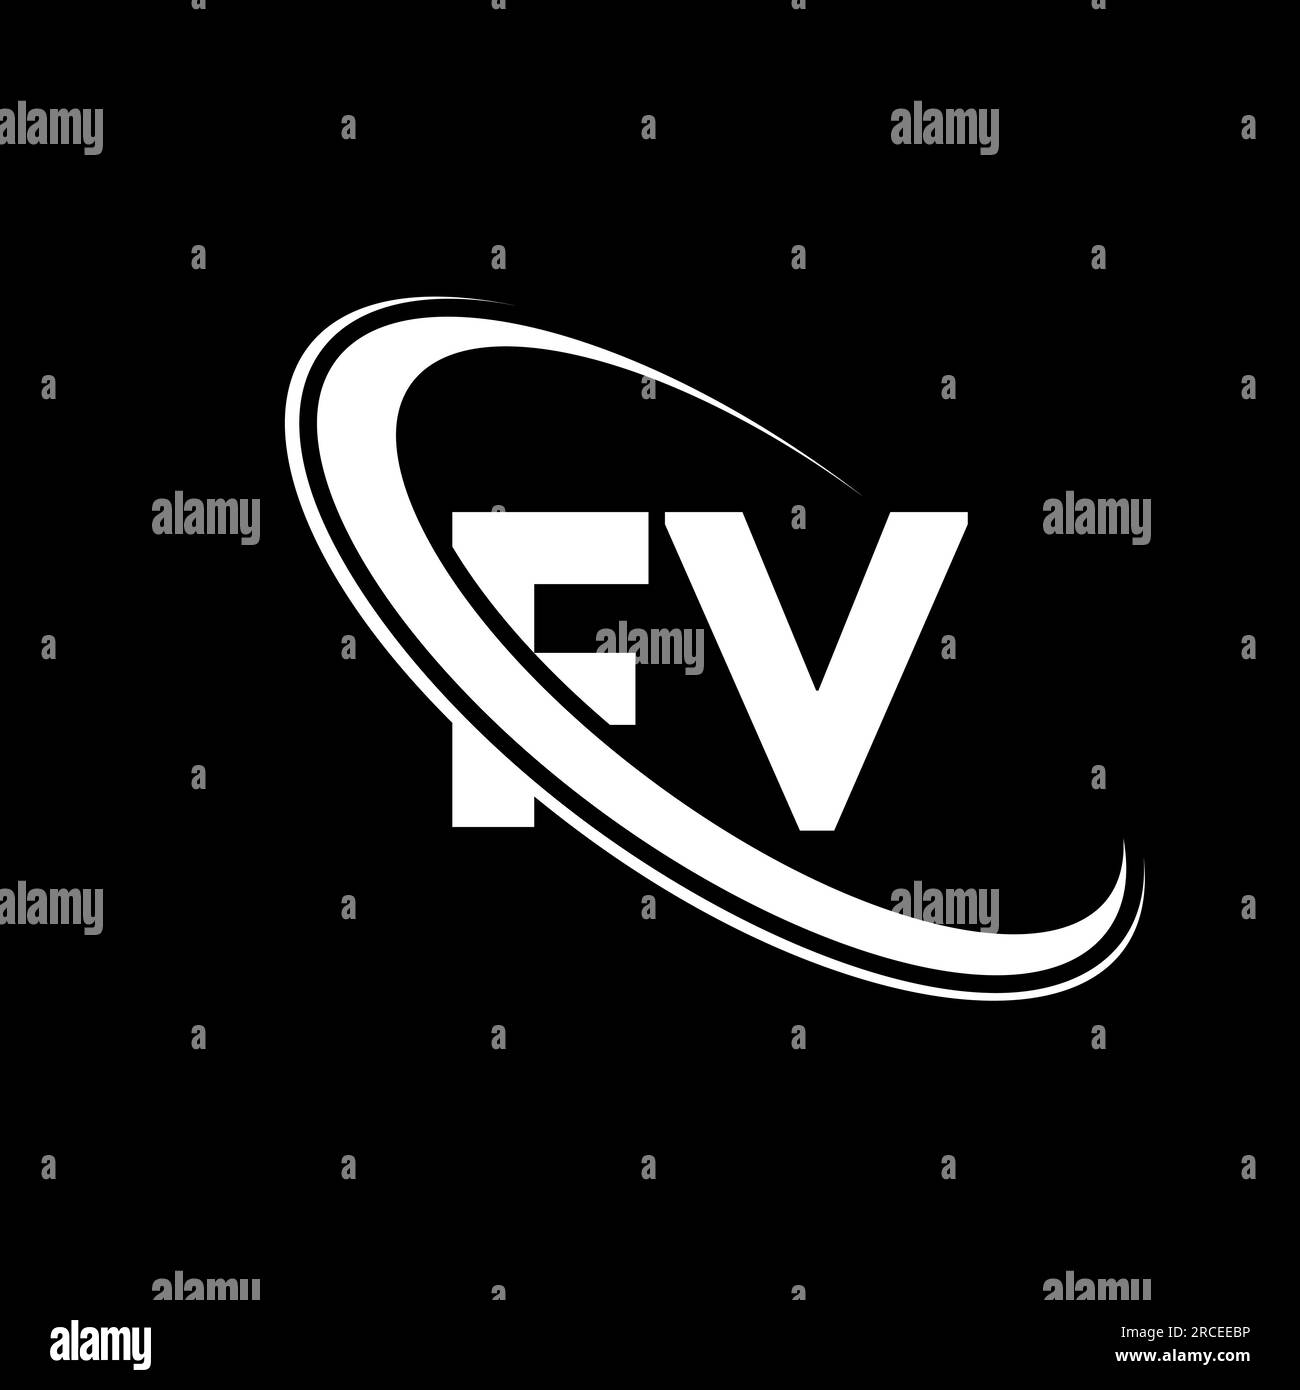 Fv Logo F V Design White Fv Letter Fv F V Letter Logo Design Initial Letter Fv Linked Circle